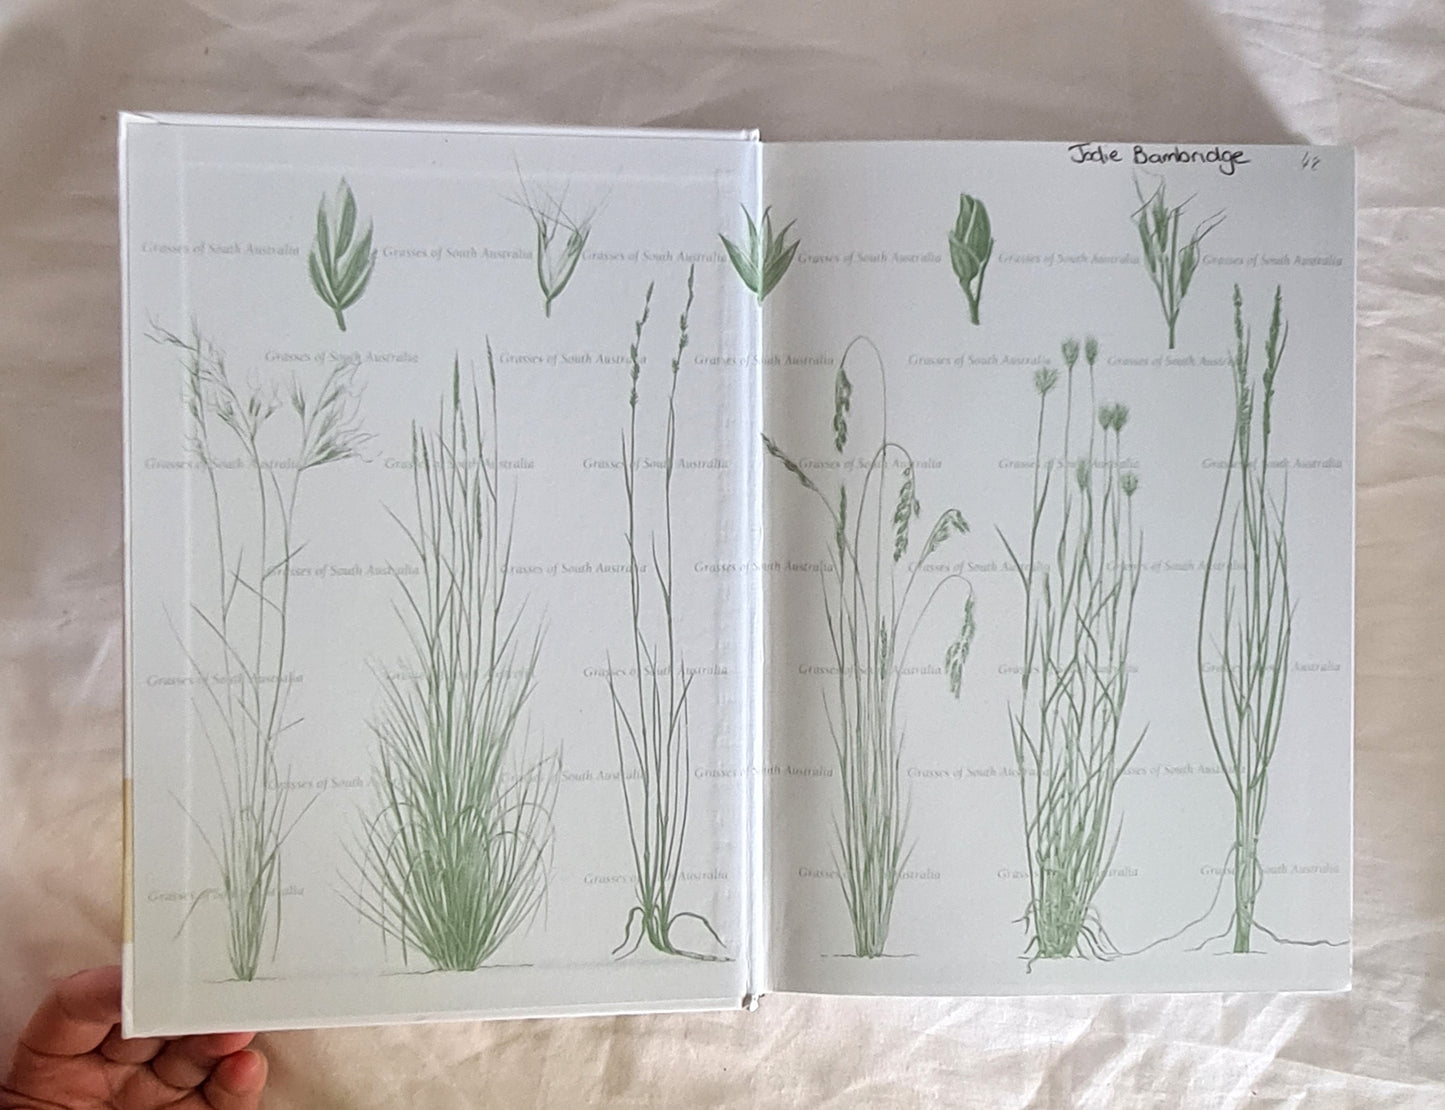 Grasses of South Australia by John Jessop, Gilbert R. M. Dashorst and Fiona M. James